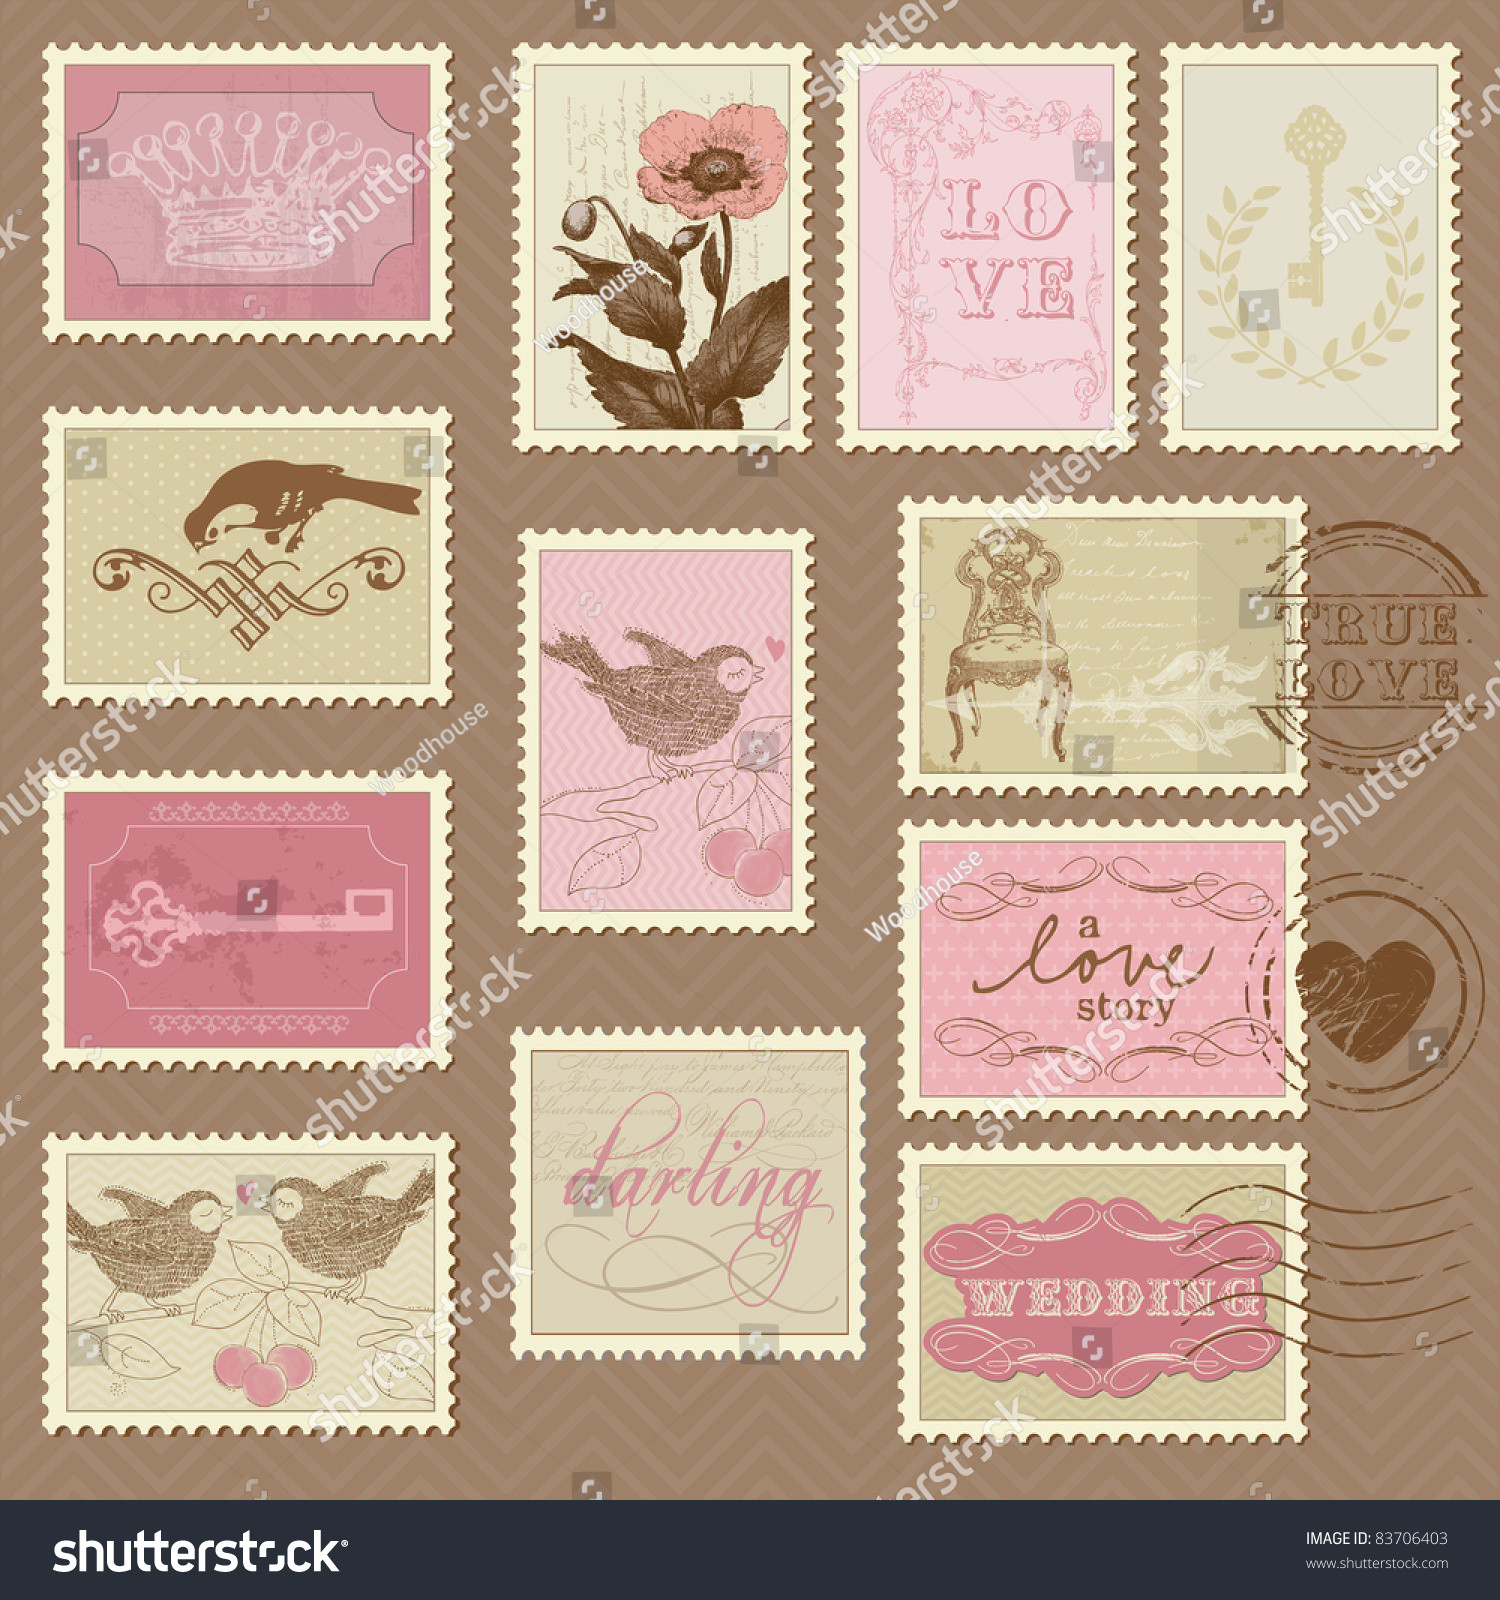 Wedding Invitation Postage
 Retro Postage Stamps Wedding Design Invitation Stock